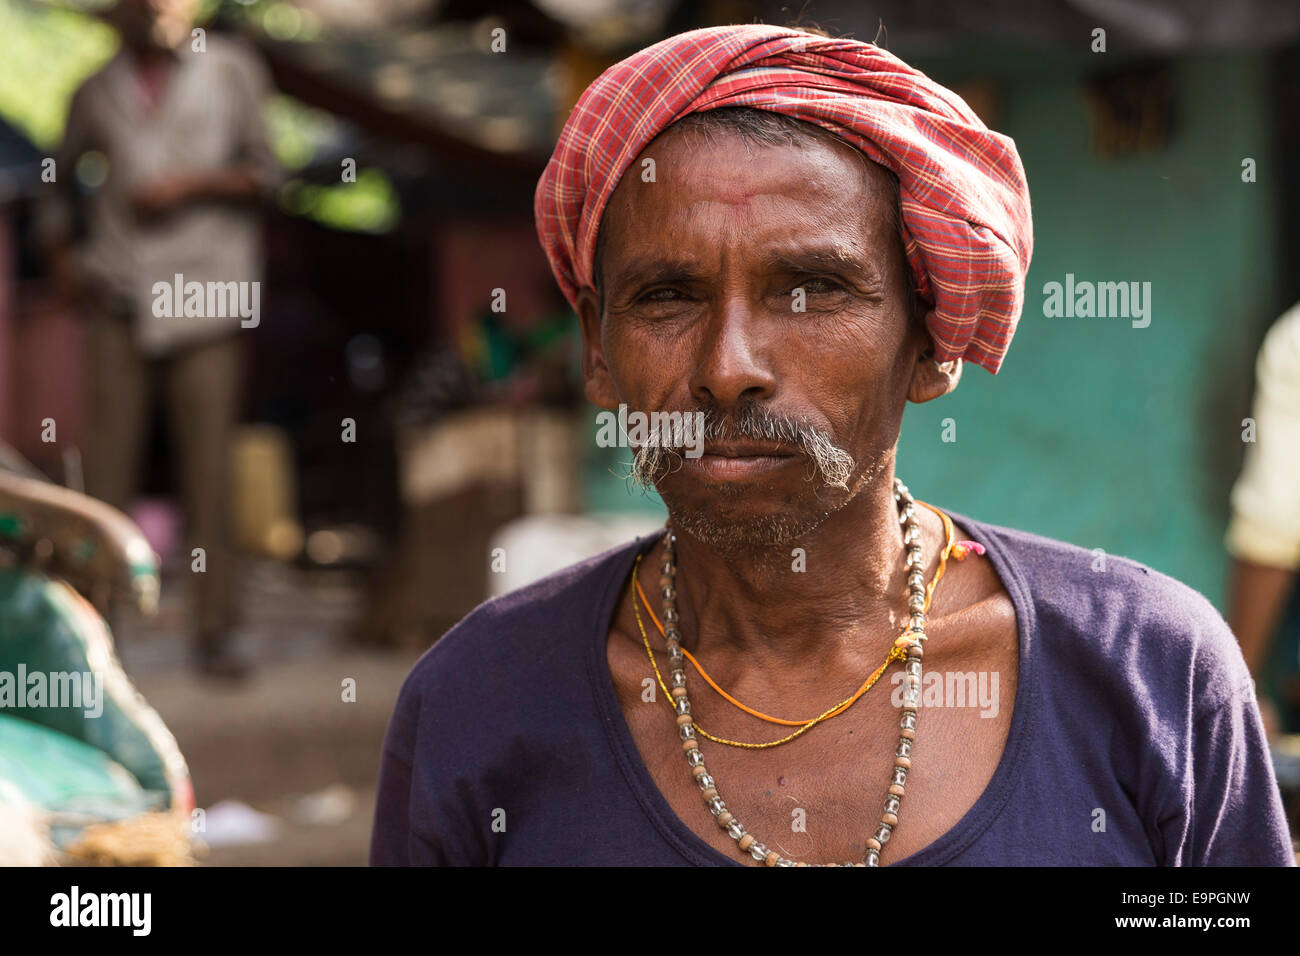 Portrait of man wearing a red turban. Mullik Ghat Flower Market, Kolkata, West Bengal, India Stock Photo